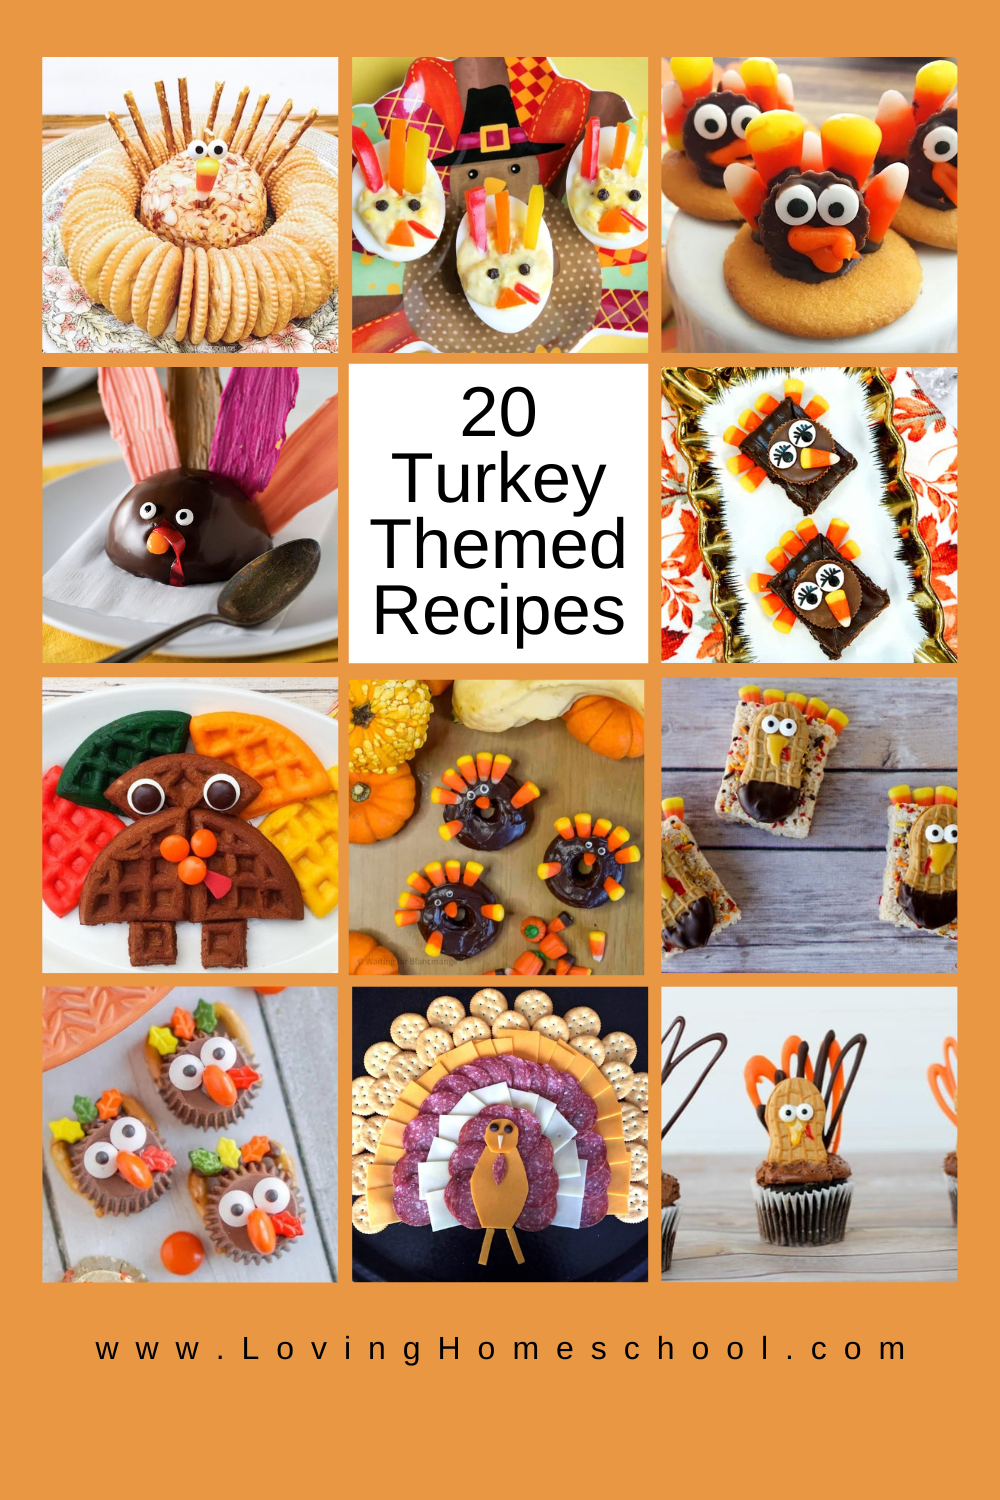 20 Turkey Themed Recipes Pinterest Pin